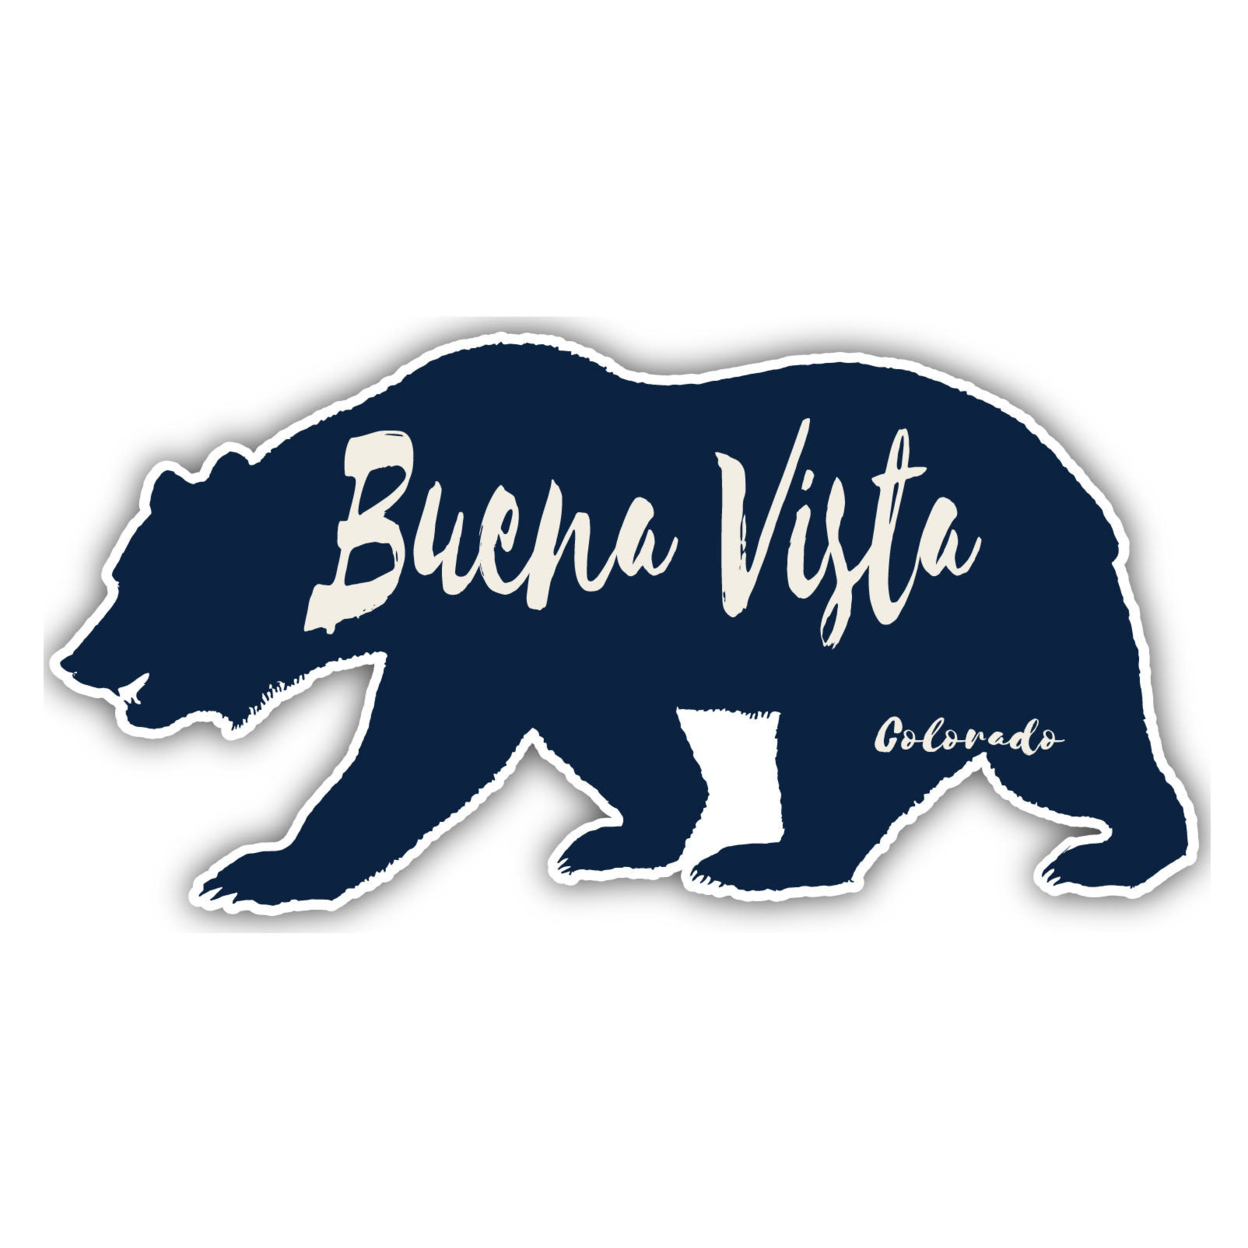 Buena Vista Colorado Souvenir Decorative Stickers (Choose Theme And Size) - 4-Pack, 10-Inch, Bear